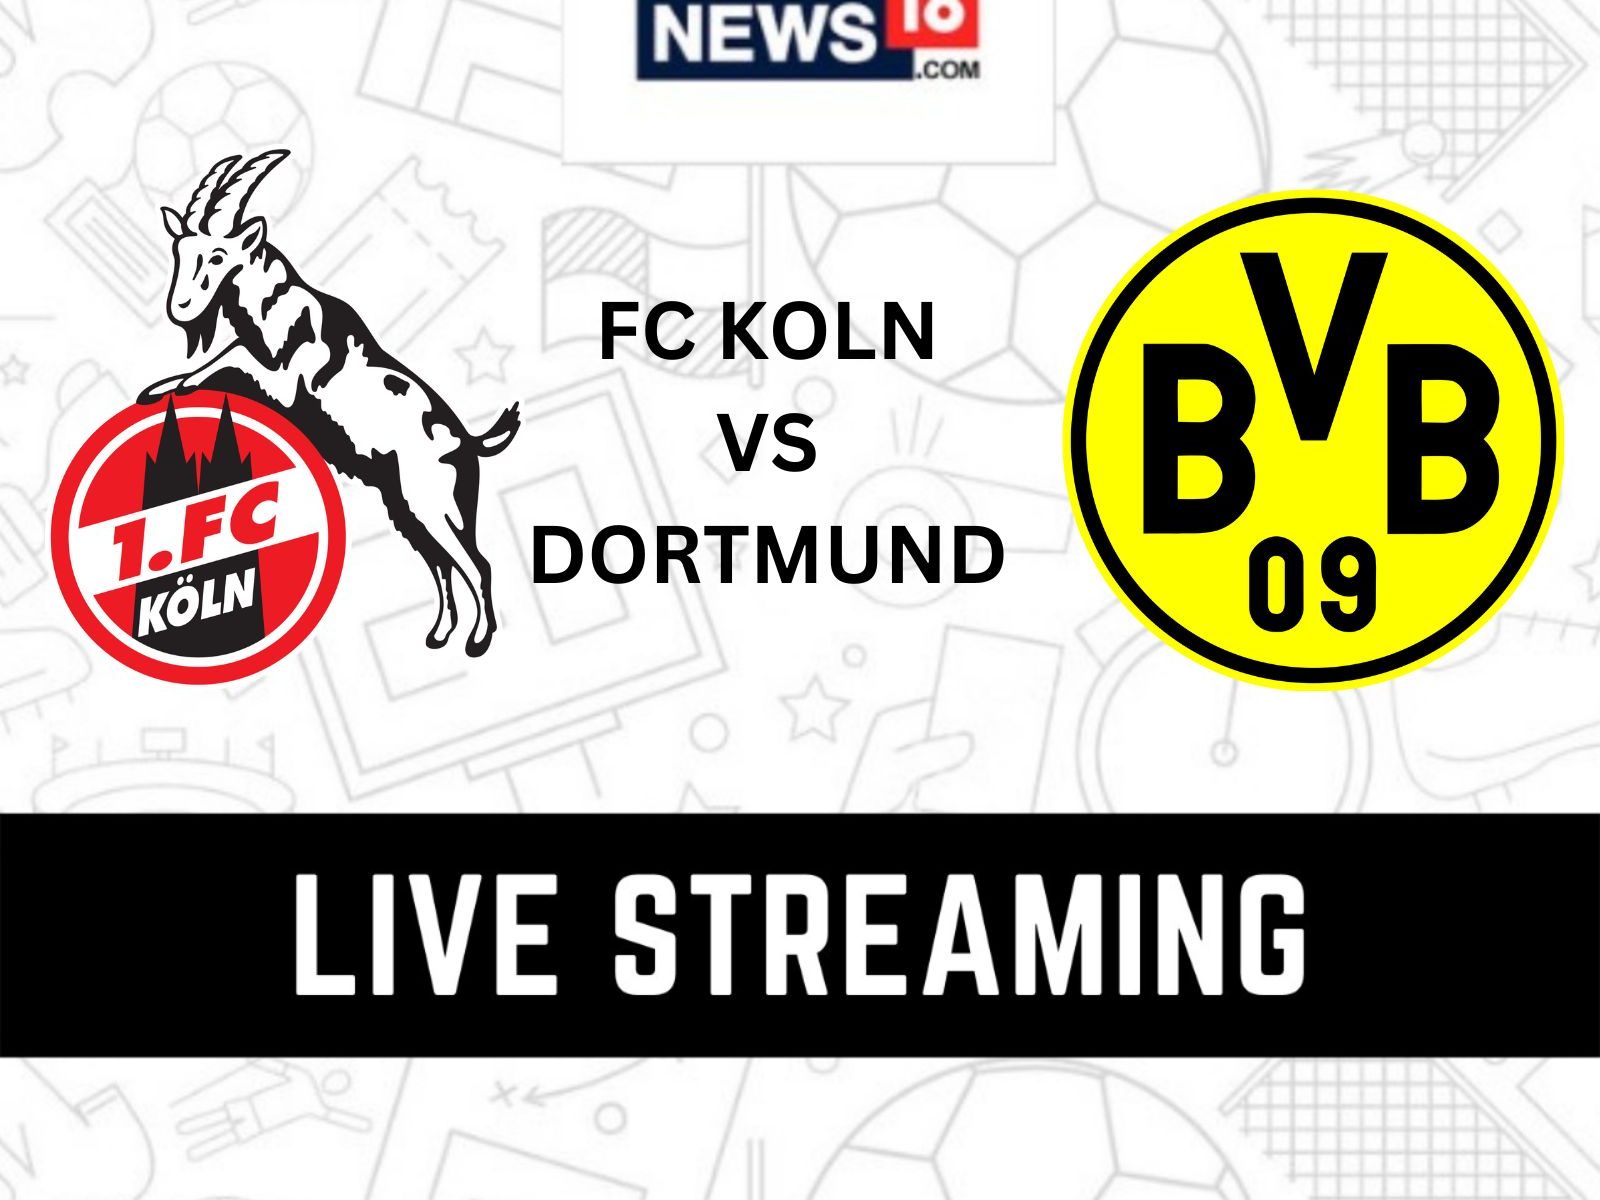 FC Koln vs Dortmund Live Streaming When and Where to Watch FC Koln vs Dortmund Bundesliga Live Coverage on Live TV Online